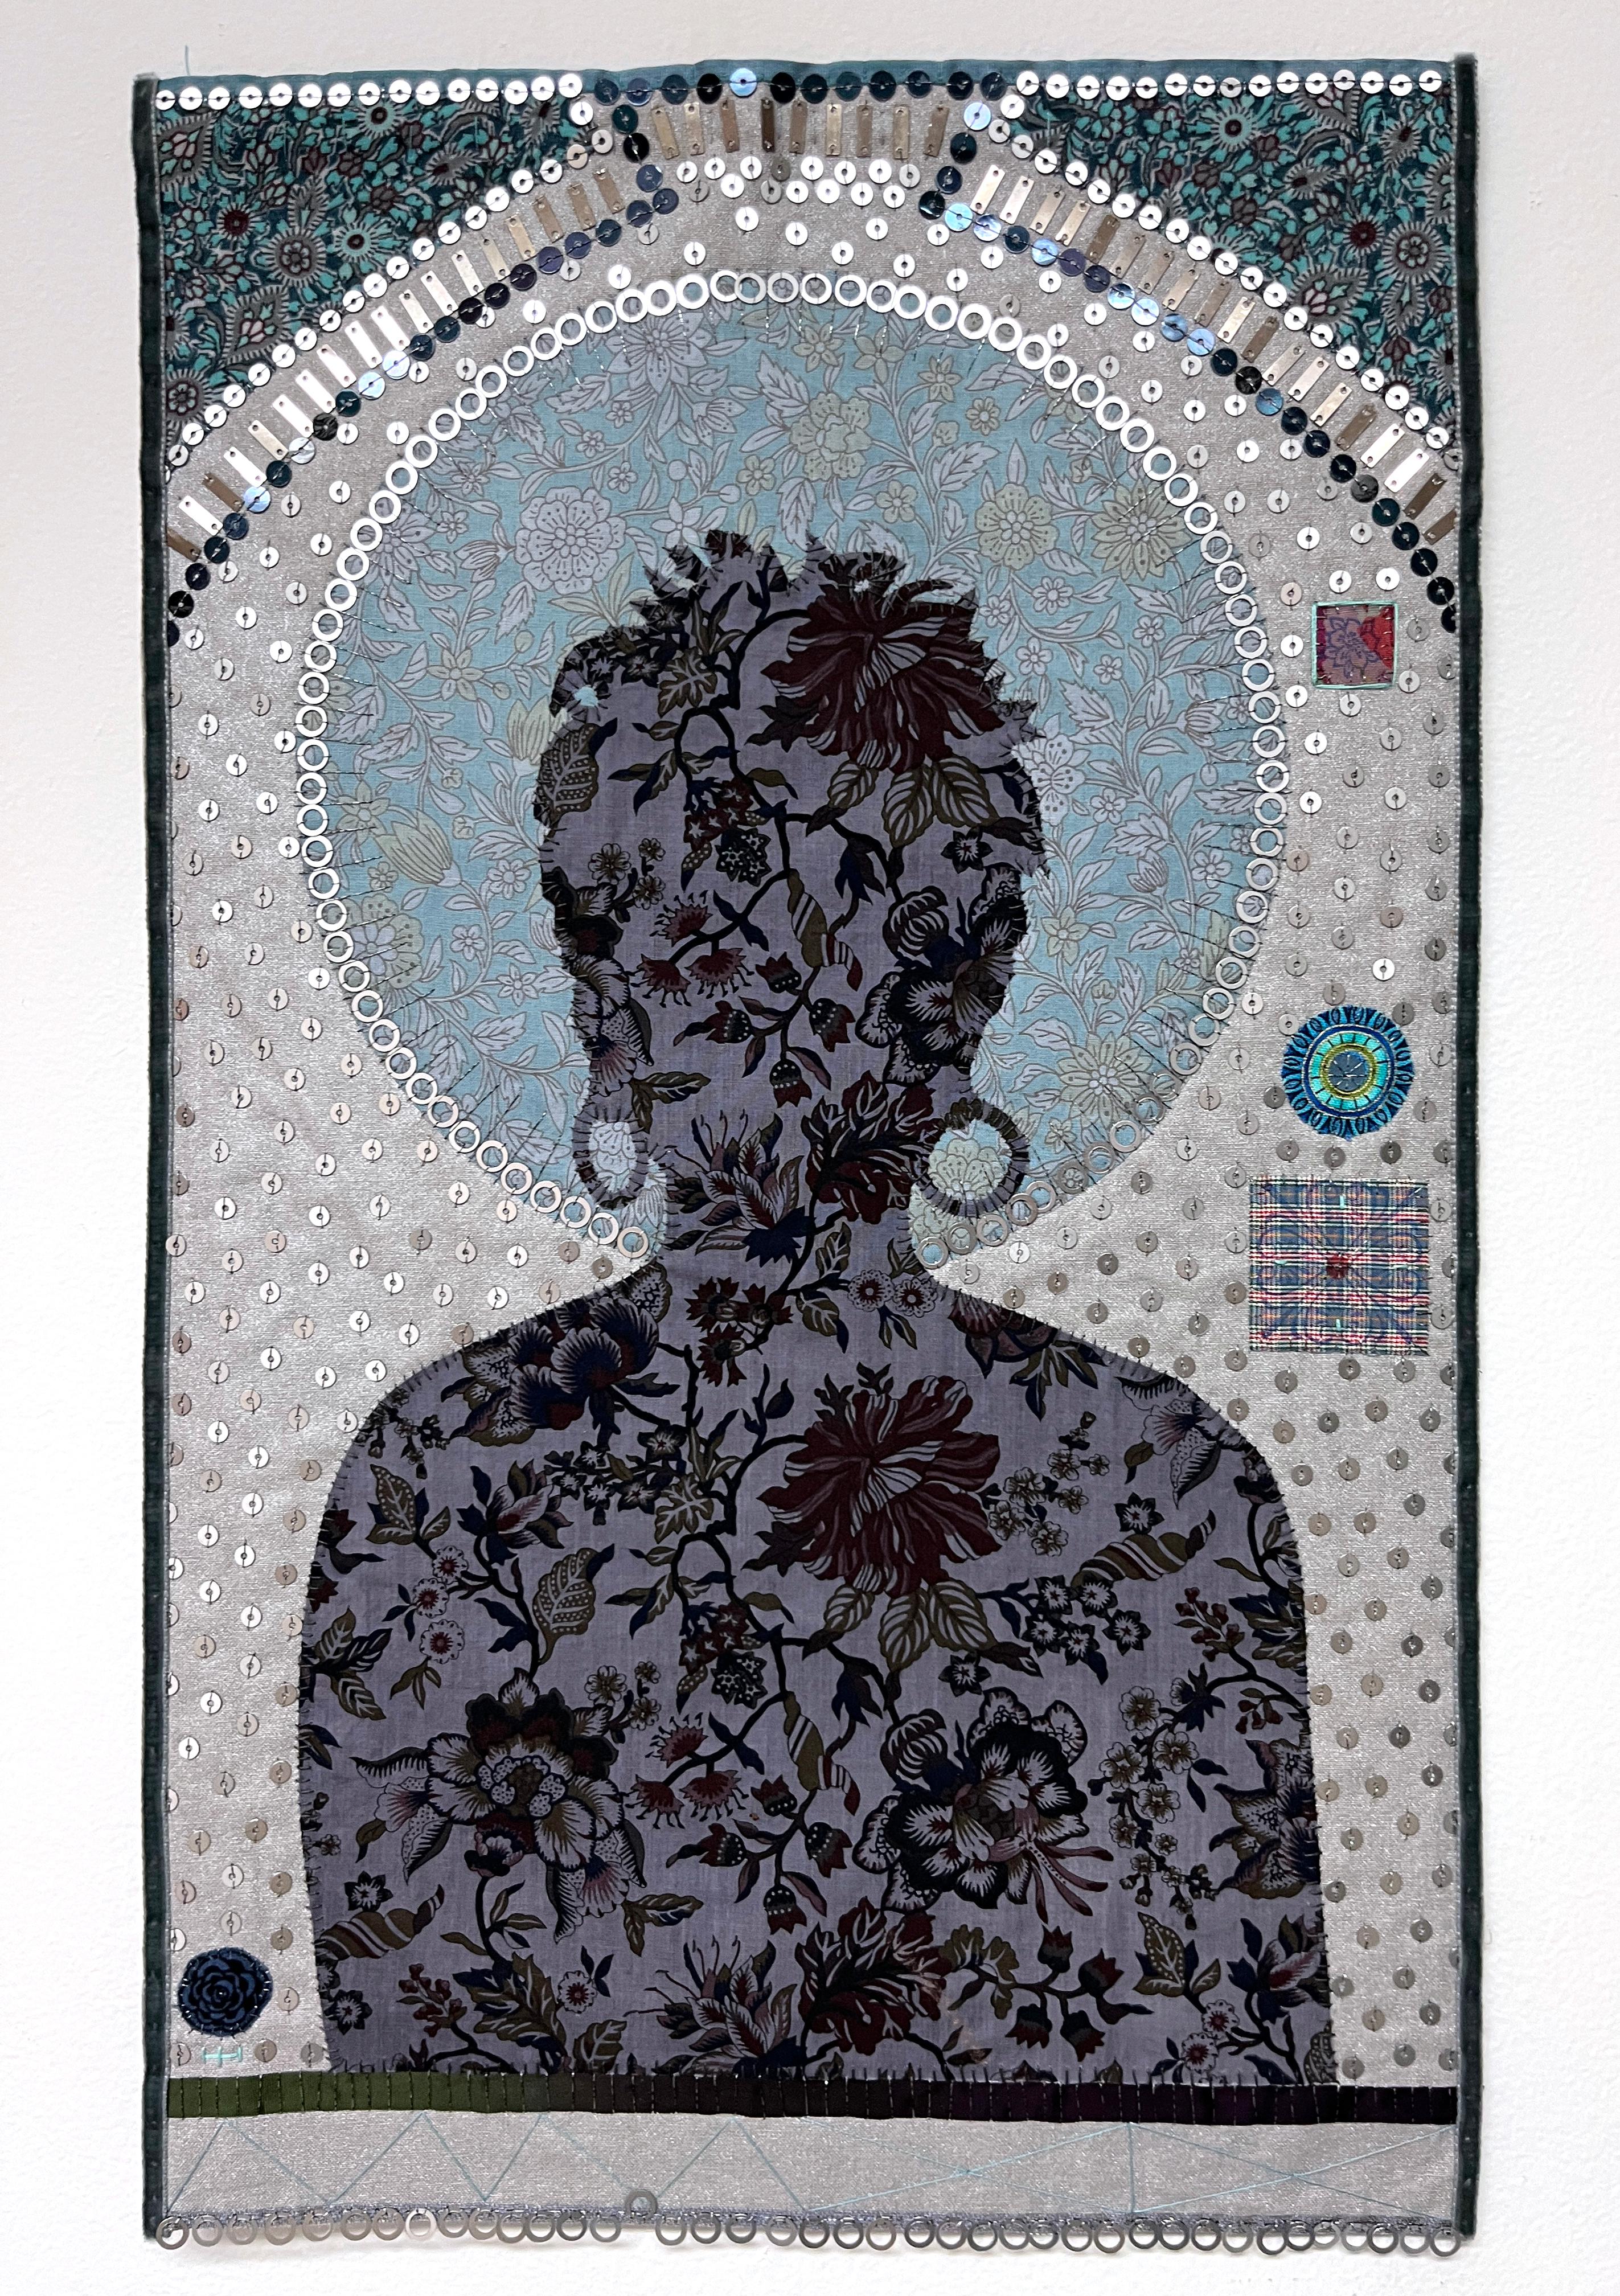 Untitled MM7, gray, blue, patterned, textile, figure, silhouette, icon - Sculpture by Jan Testori - Markman